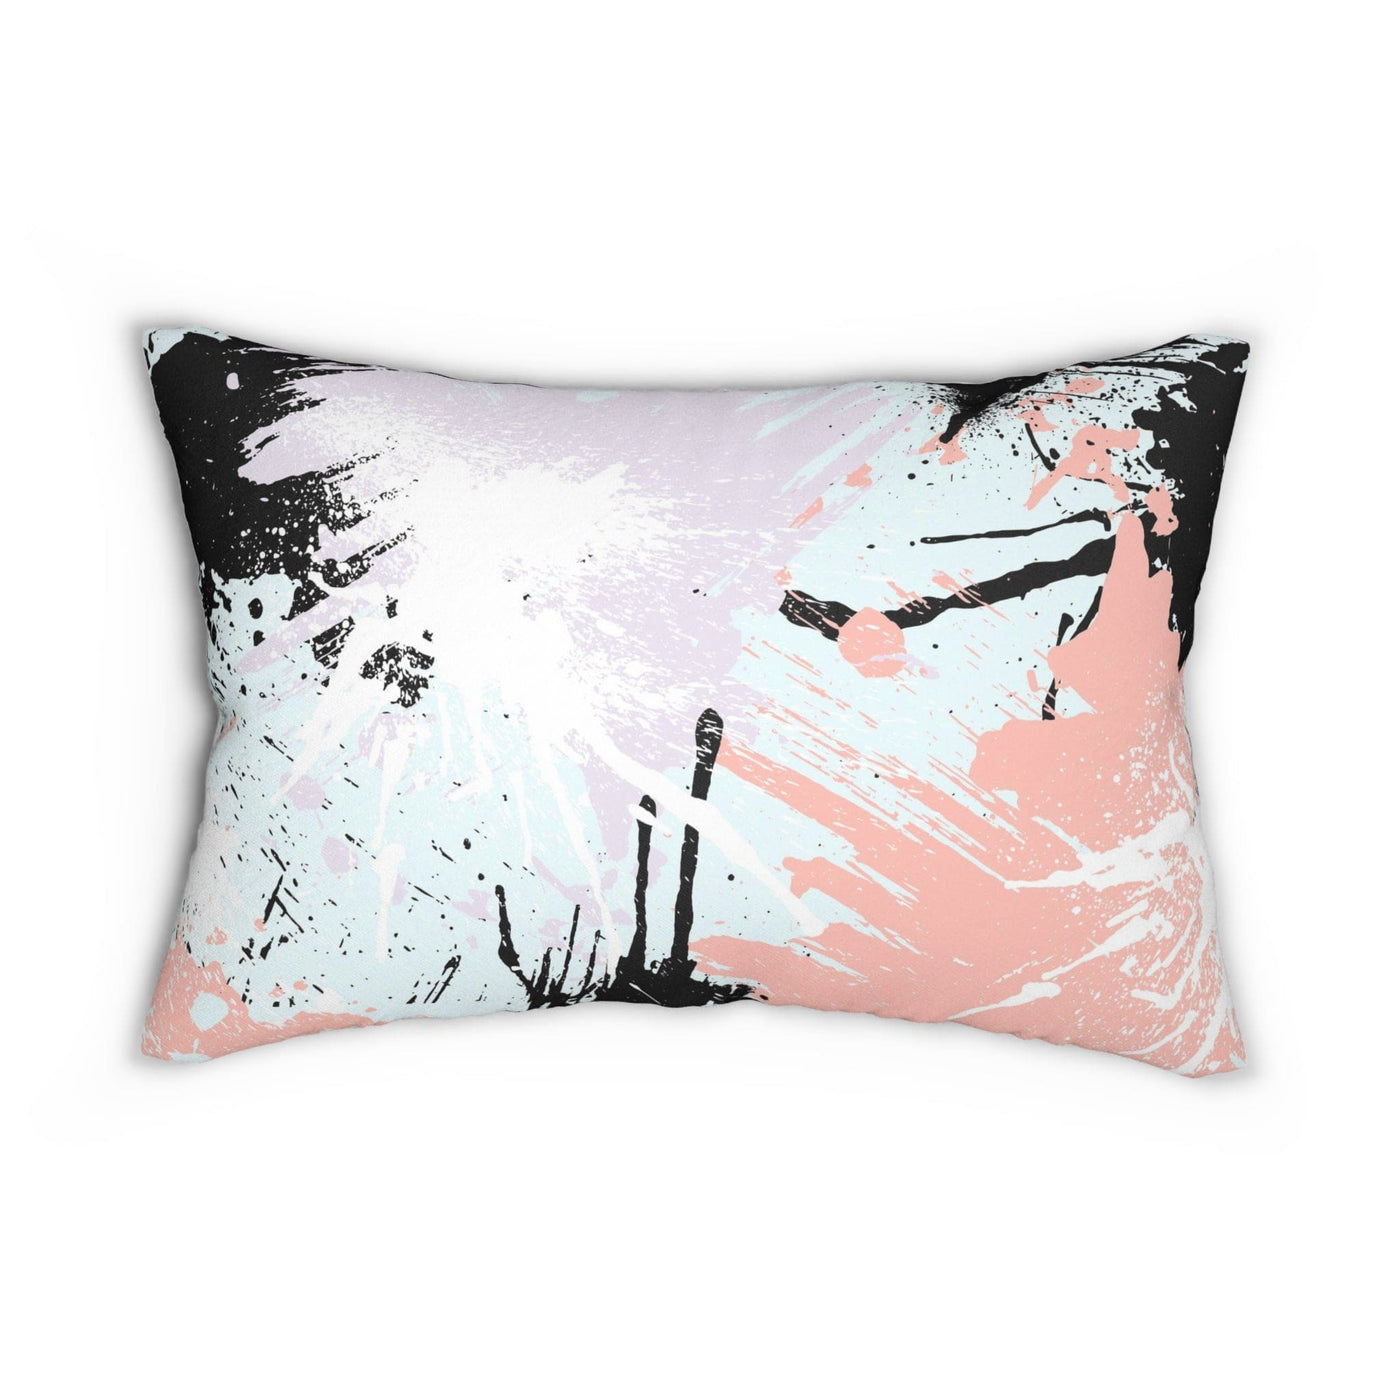 Decorative Lumbar Throw Pillow - Abstract Pink Black White Paint Splatter